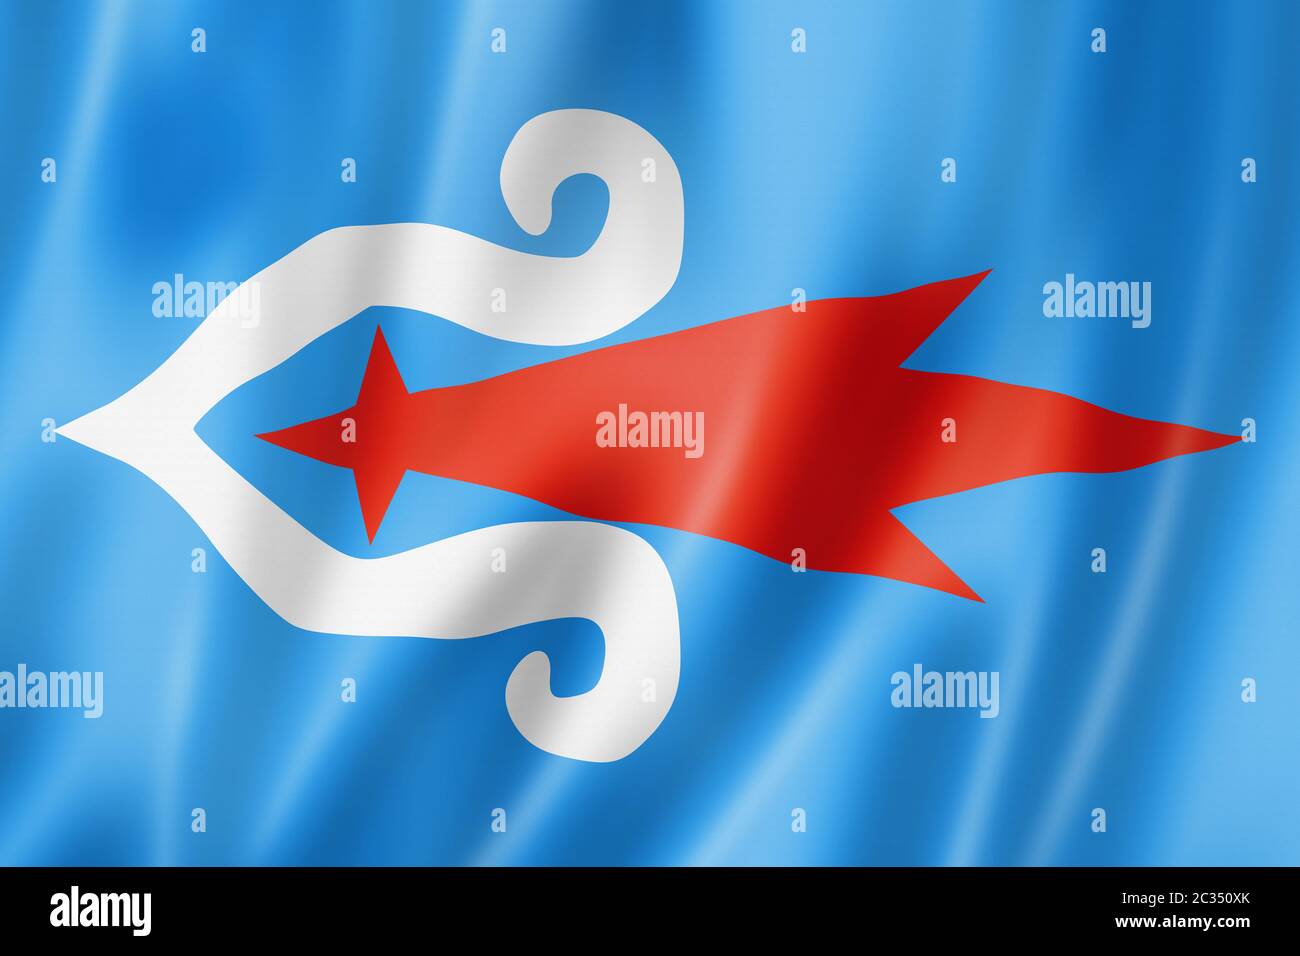 Ainu people ethnic flag, Asia. 3D illustration Stock Photo